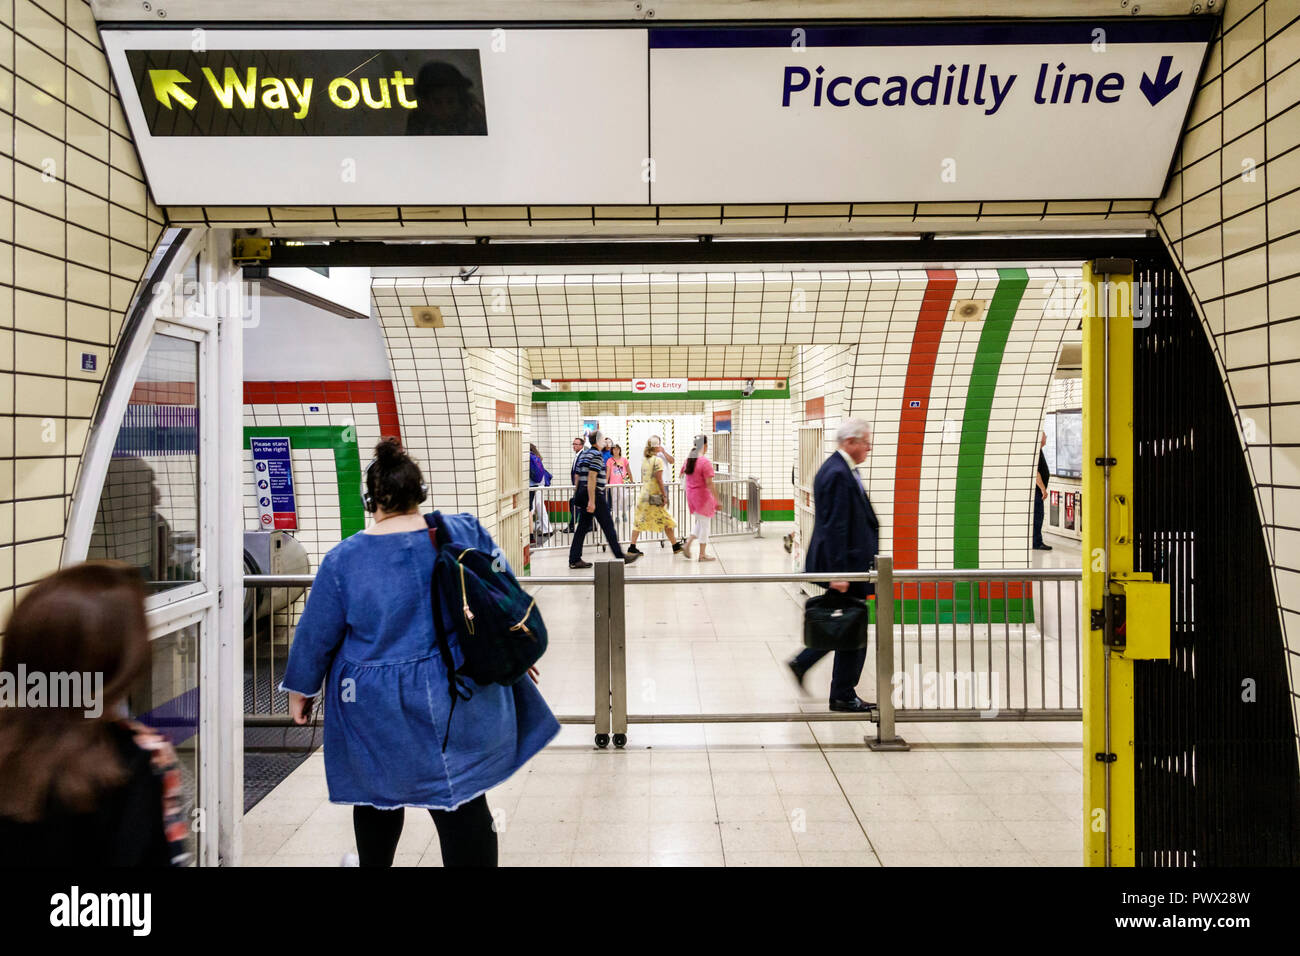 Londres Angleterre,Royaume-Uni,Piccadilly Circus métro Station métro ligne,Piccadilly ligne,métro ligne,sortie,tunnel,homme homme hommes,femme femmes,com Banque D'Images